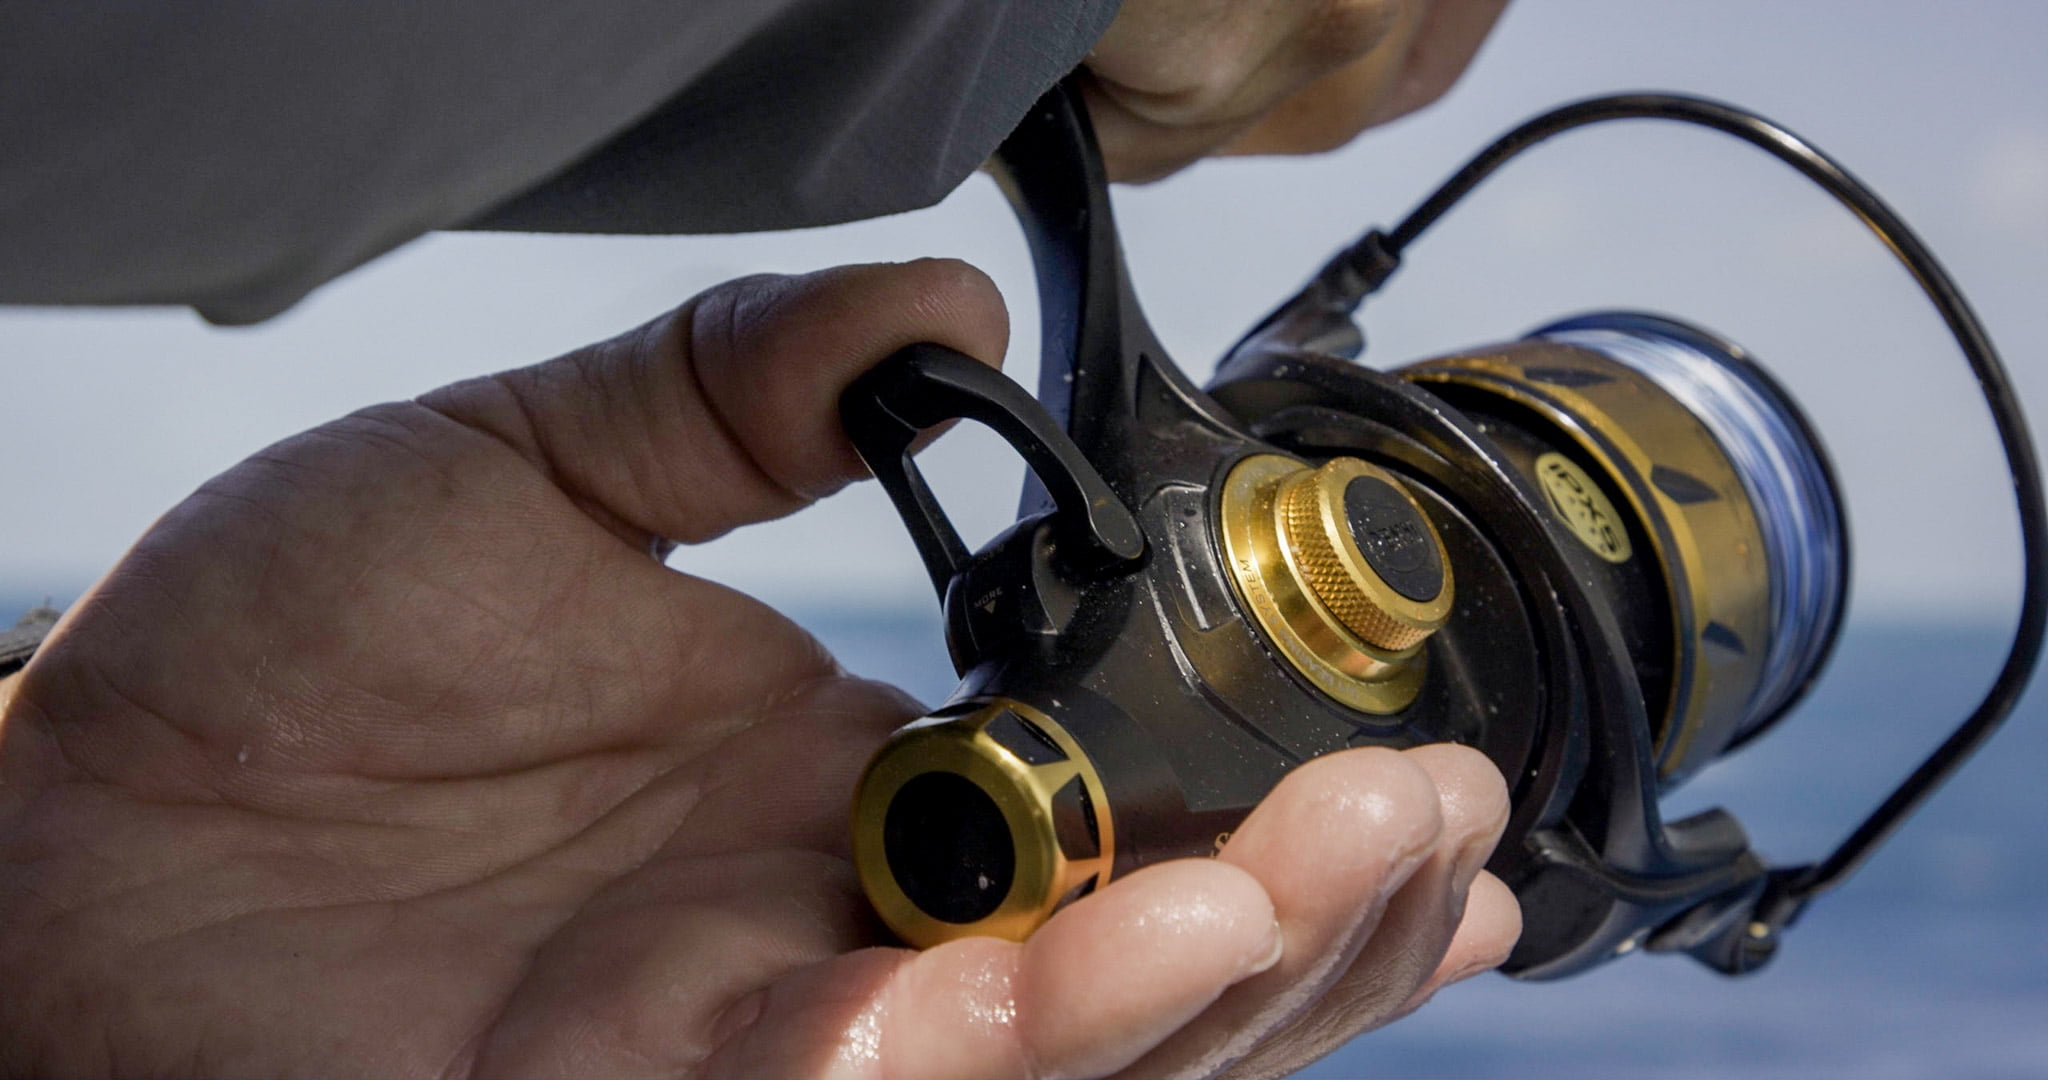 PENN 7' Spinfisher VI Live Liner Spinning Fishing Rod & 6500 Reel